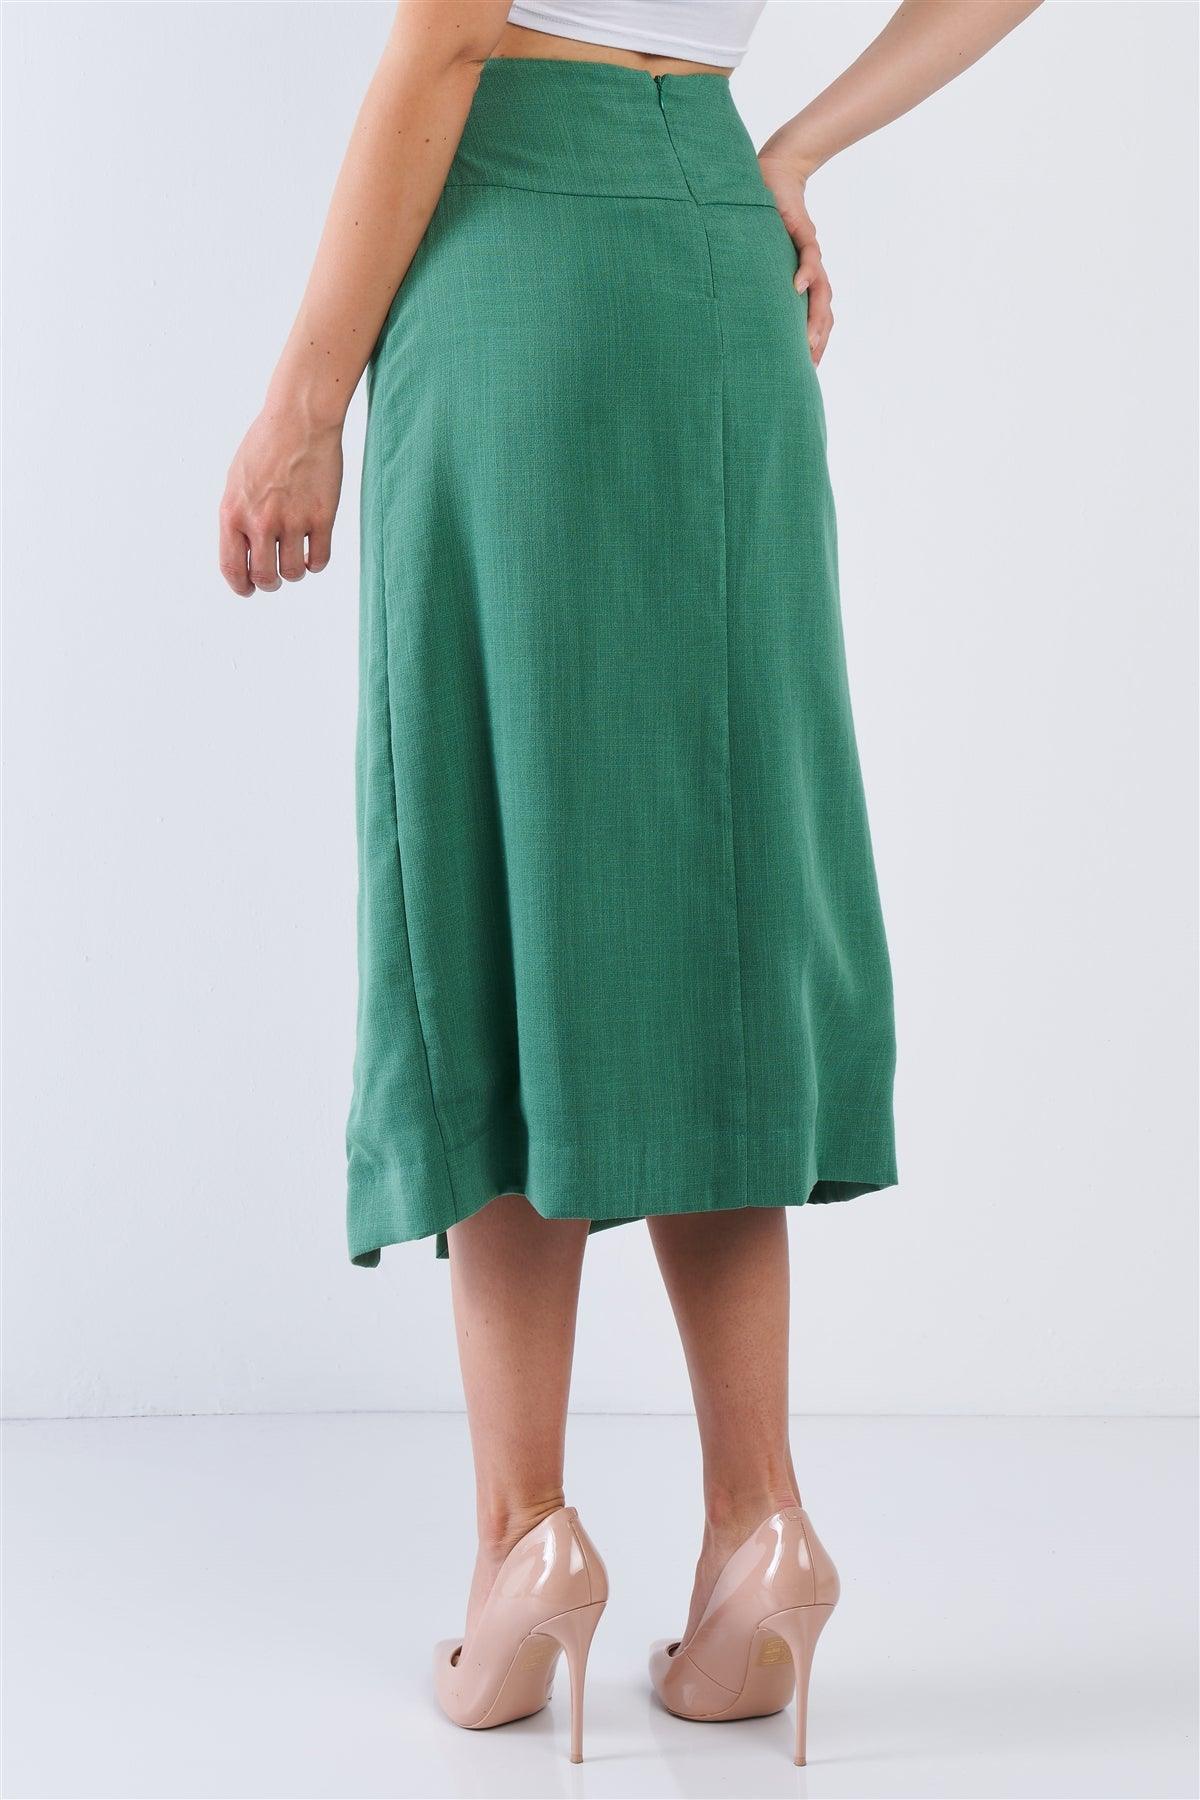 Green Button Down Collared Skirt /2-2-2